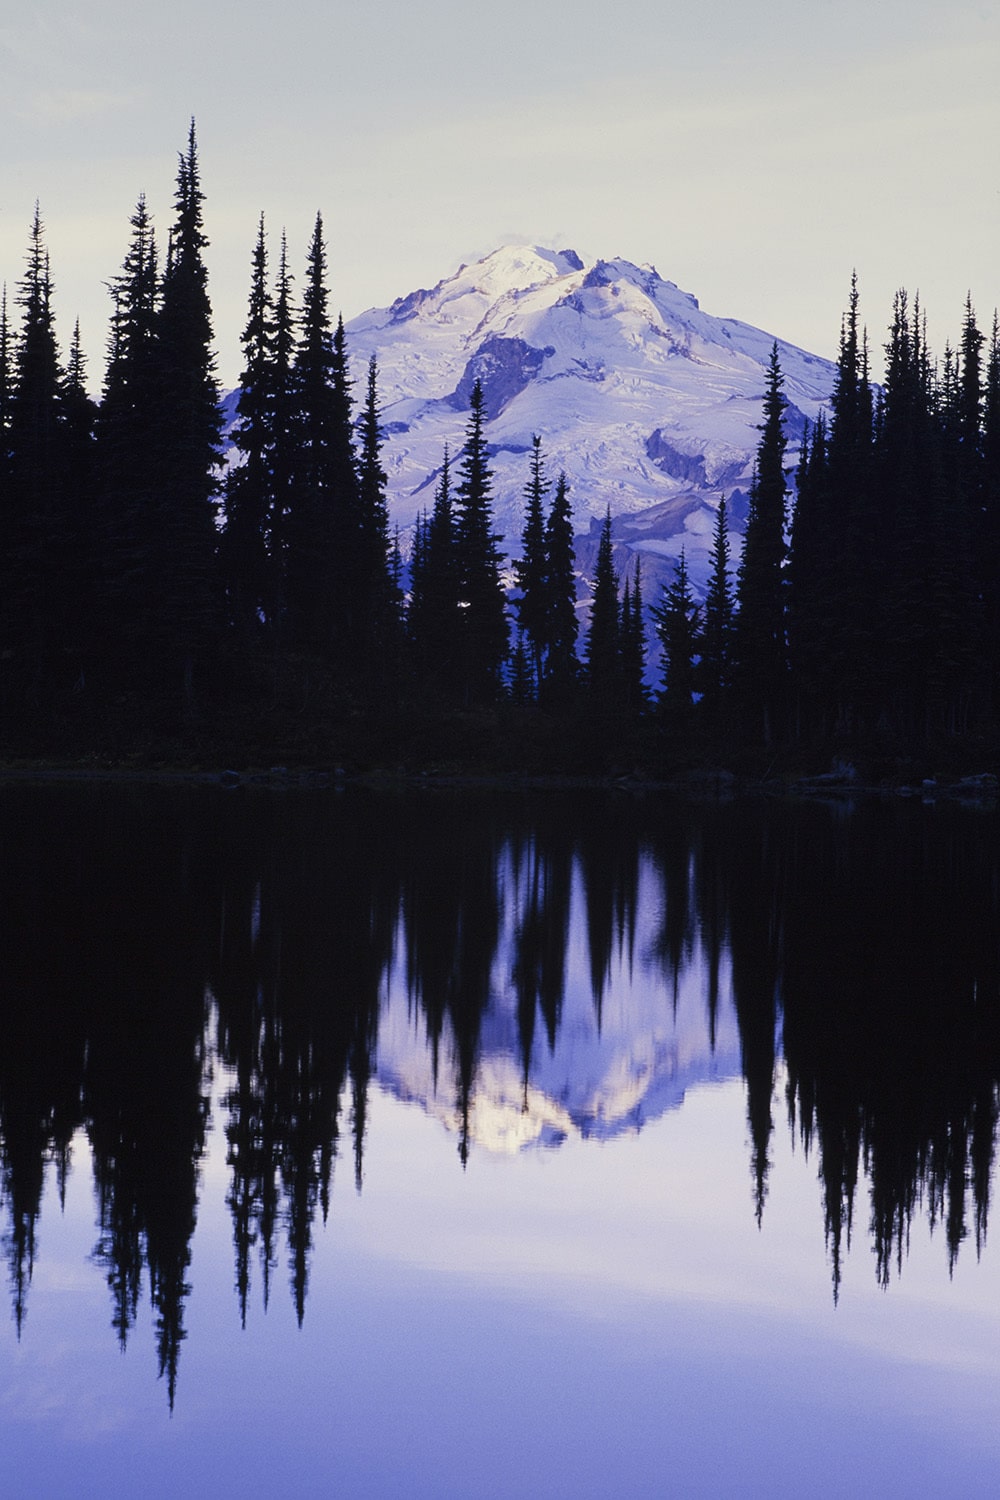 Glacier Peak Reflected In Image Lake At Dawn, North Cascades, WA shot on Fuji RVP slide film